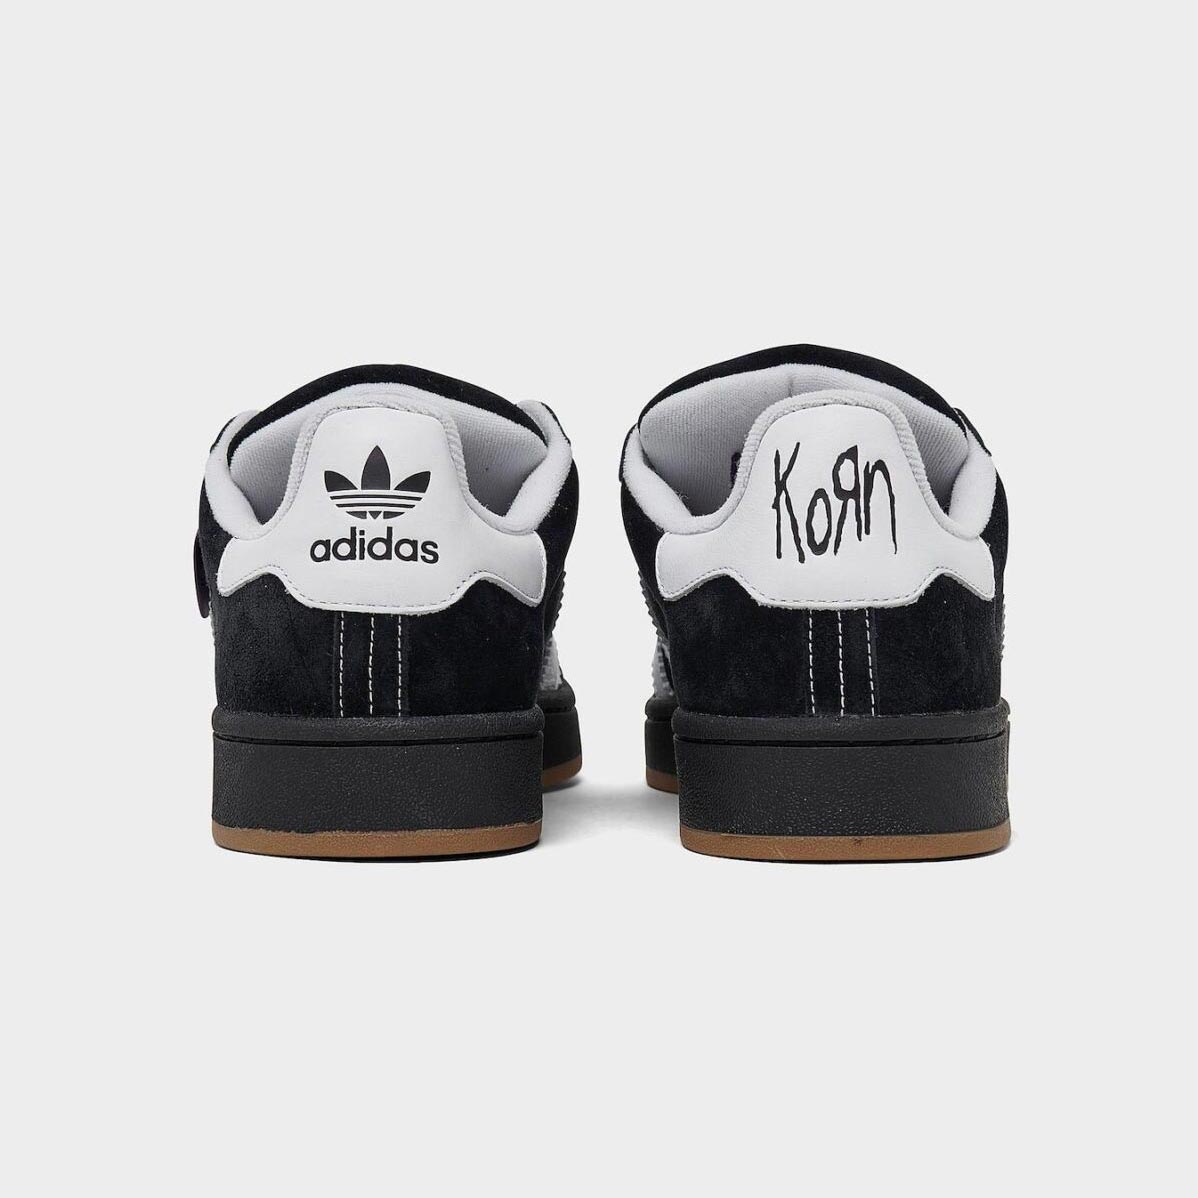 Korn X Adidas Sneaker Collaboration Releasing October 27